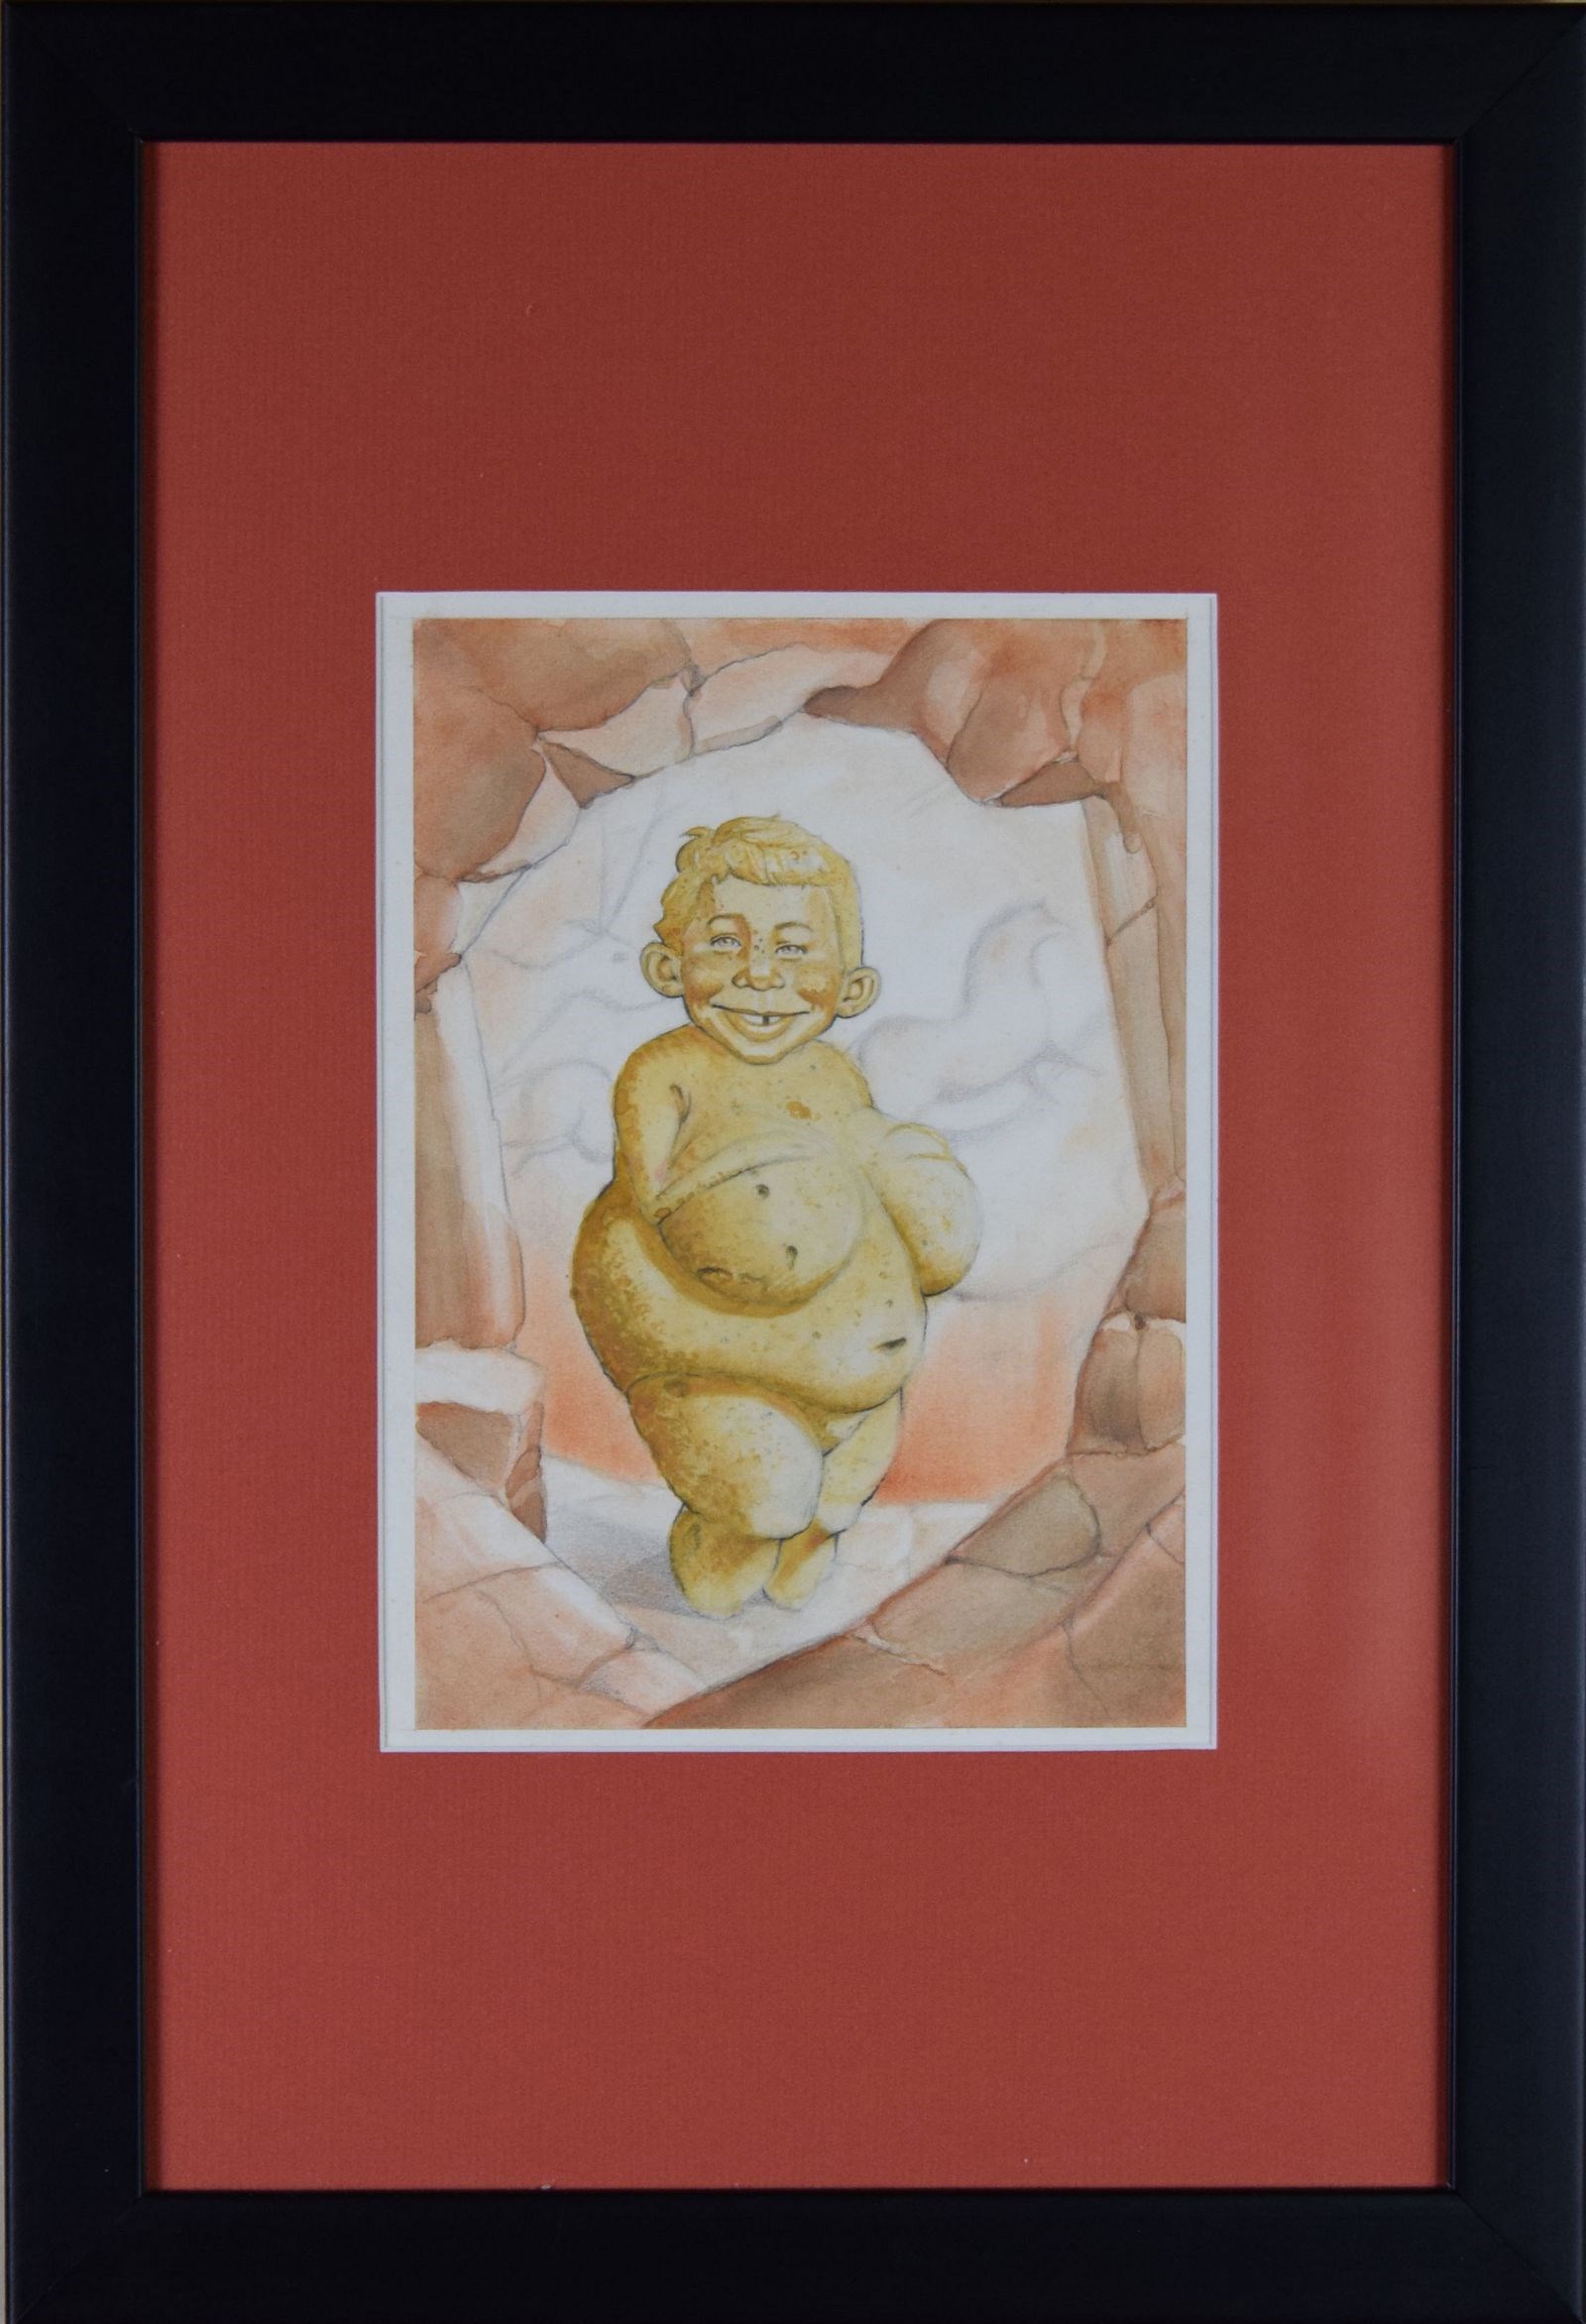 - MAD Magazine Original Art of "The Venus of Willendorf" Neuman (Germany) by Artist Gregor Mecklenburg